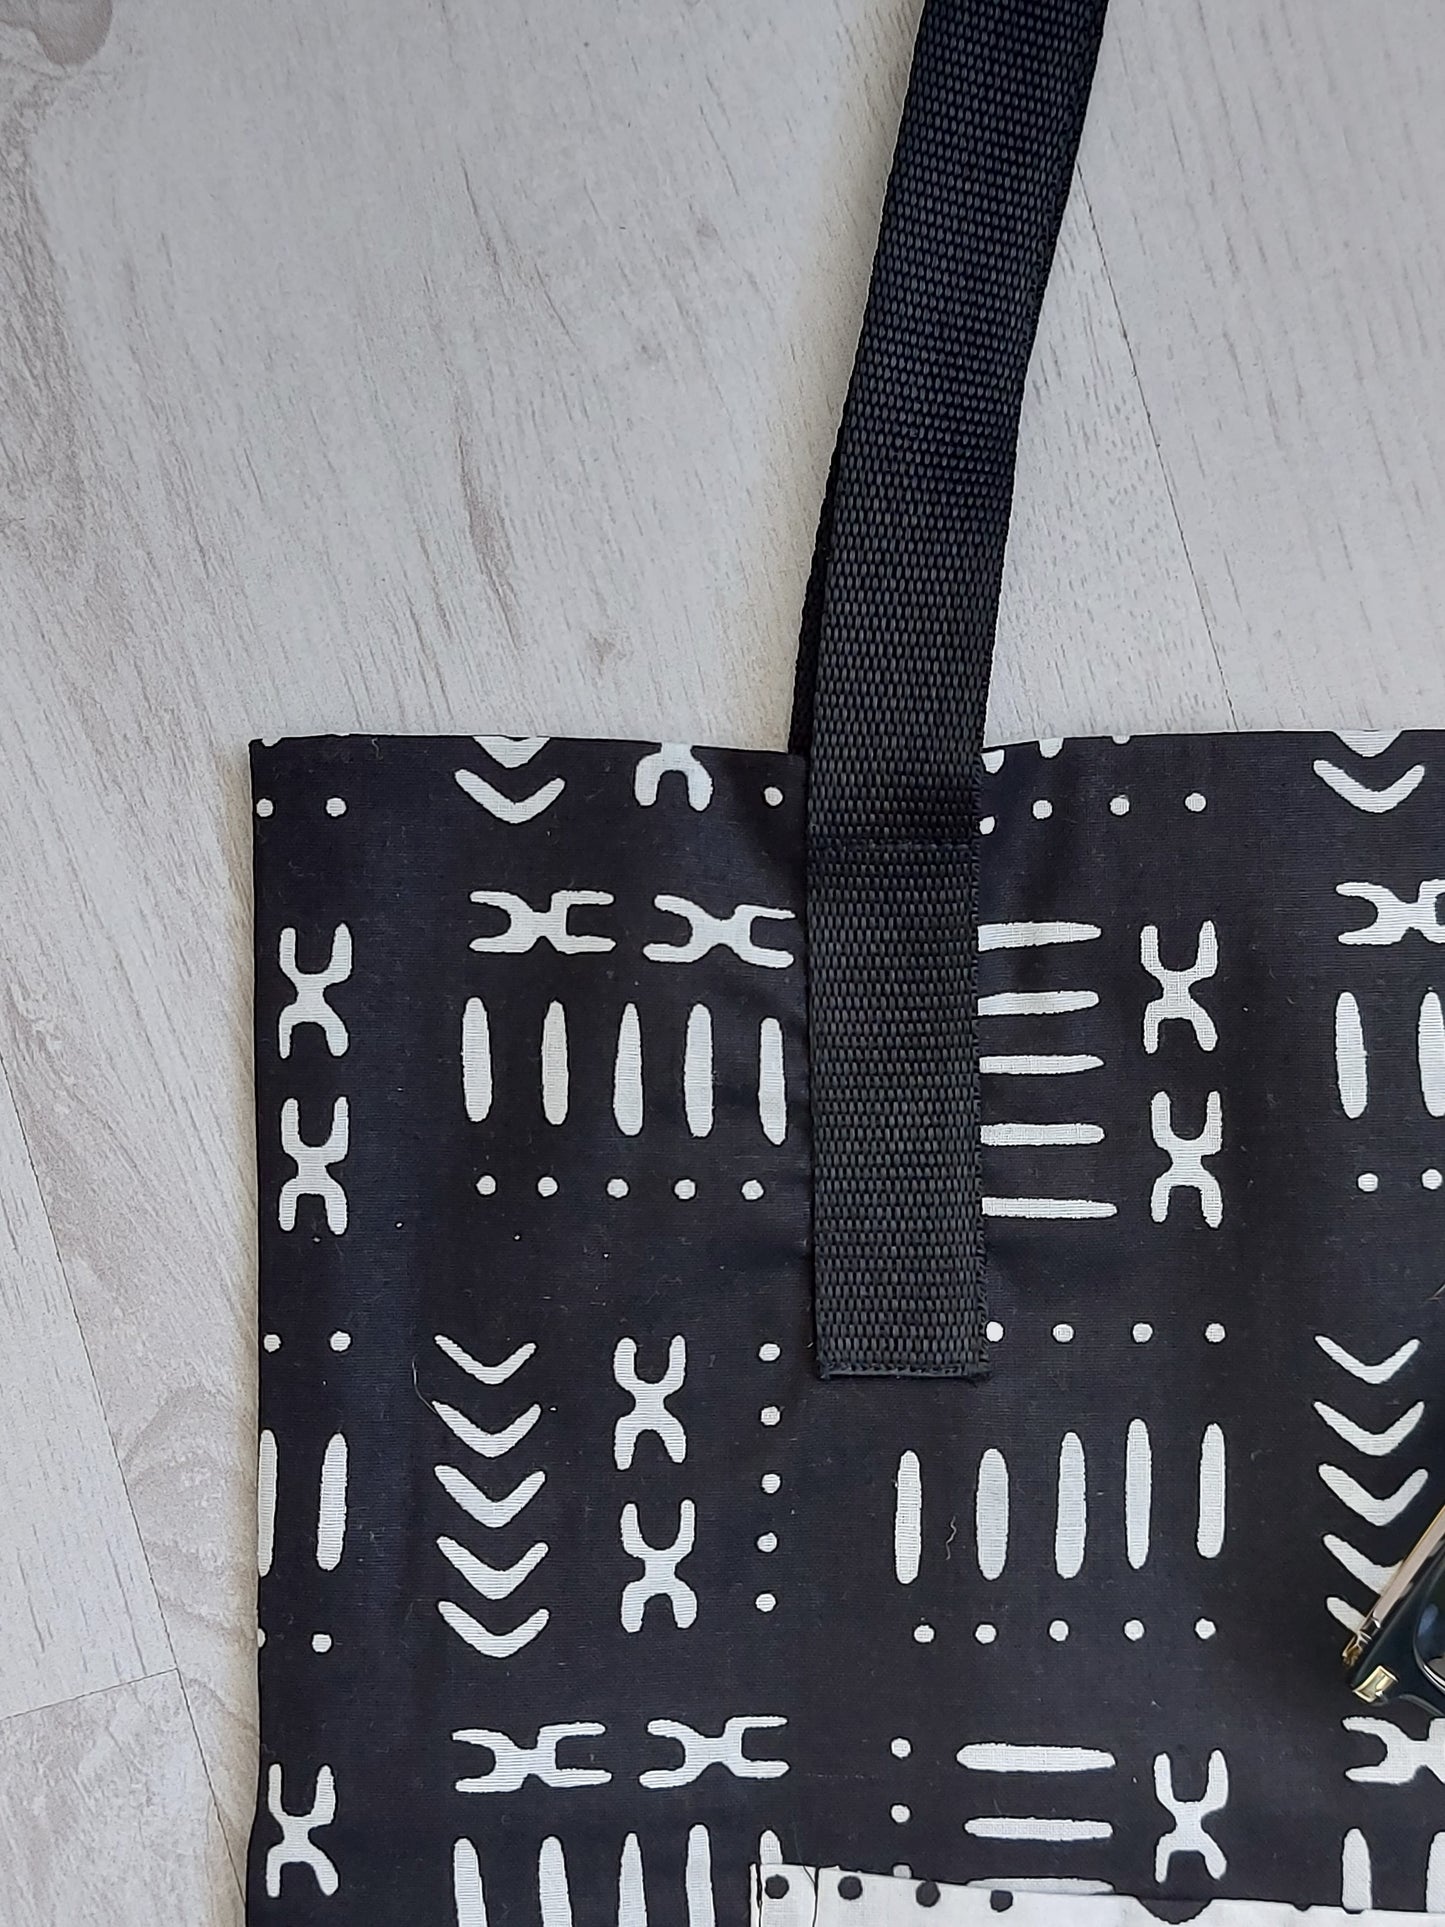 Handmade African Print Tote Bag | Beach Bag | Shopping Bag | Mudcloth Print